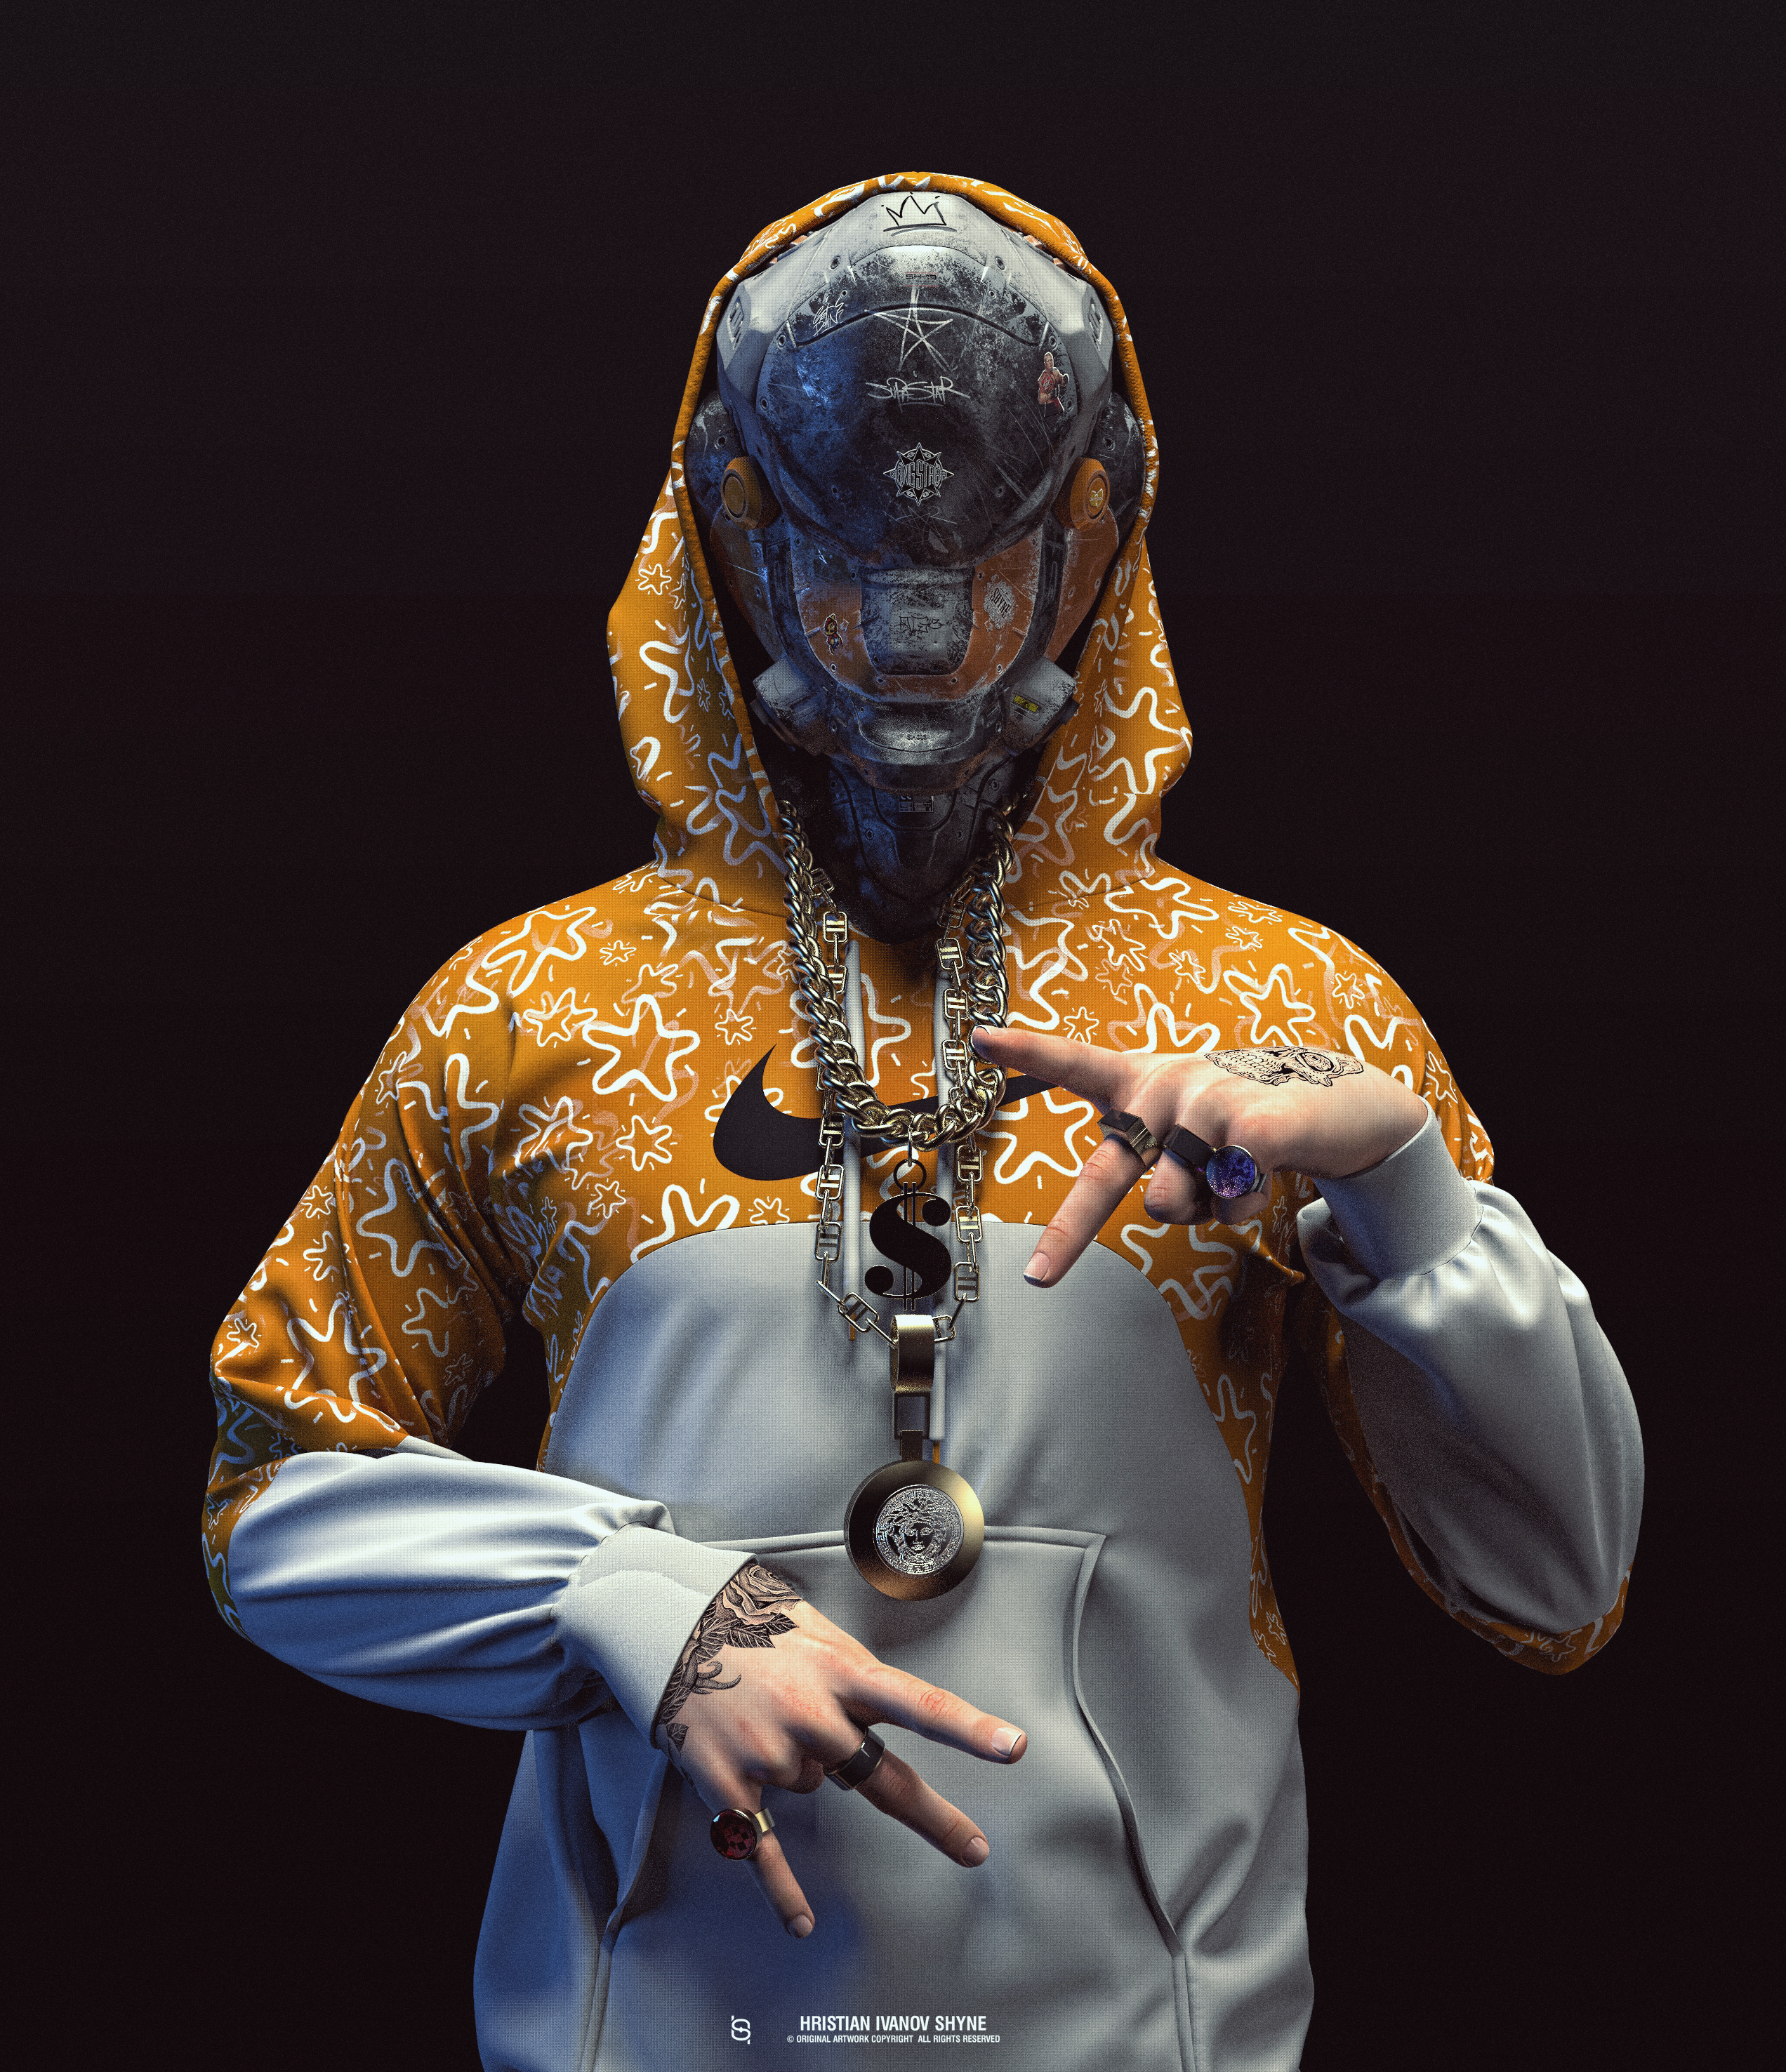 Digital Art Robot Futuristic Sweatshirts Hoods Black Background Nike Bling Tattoo 3D CGi Cyberpunk S 2544x2952